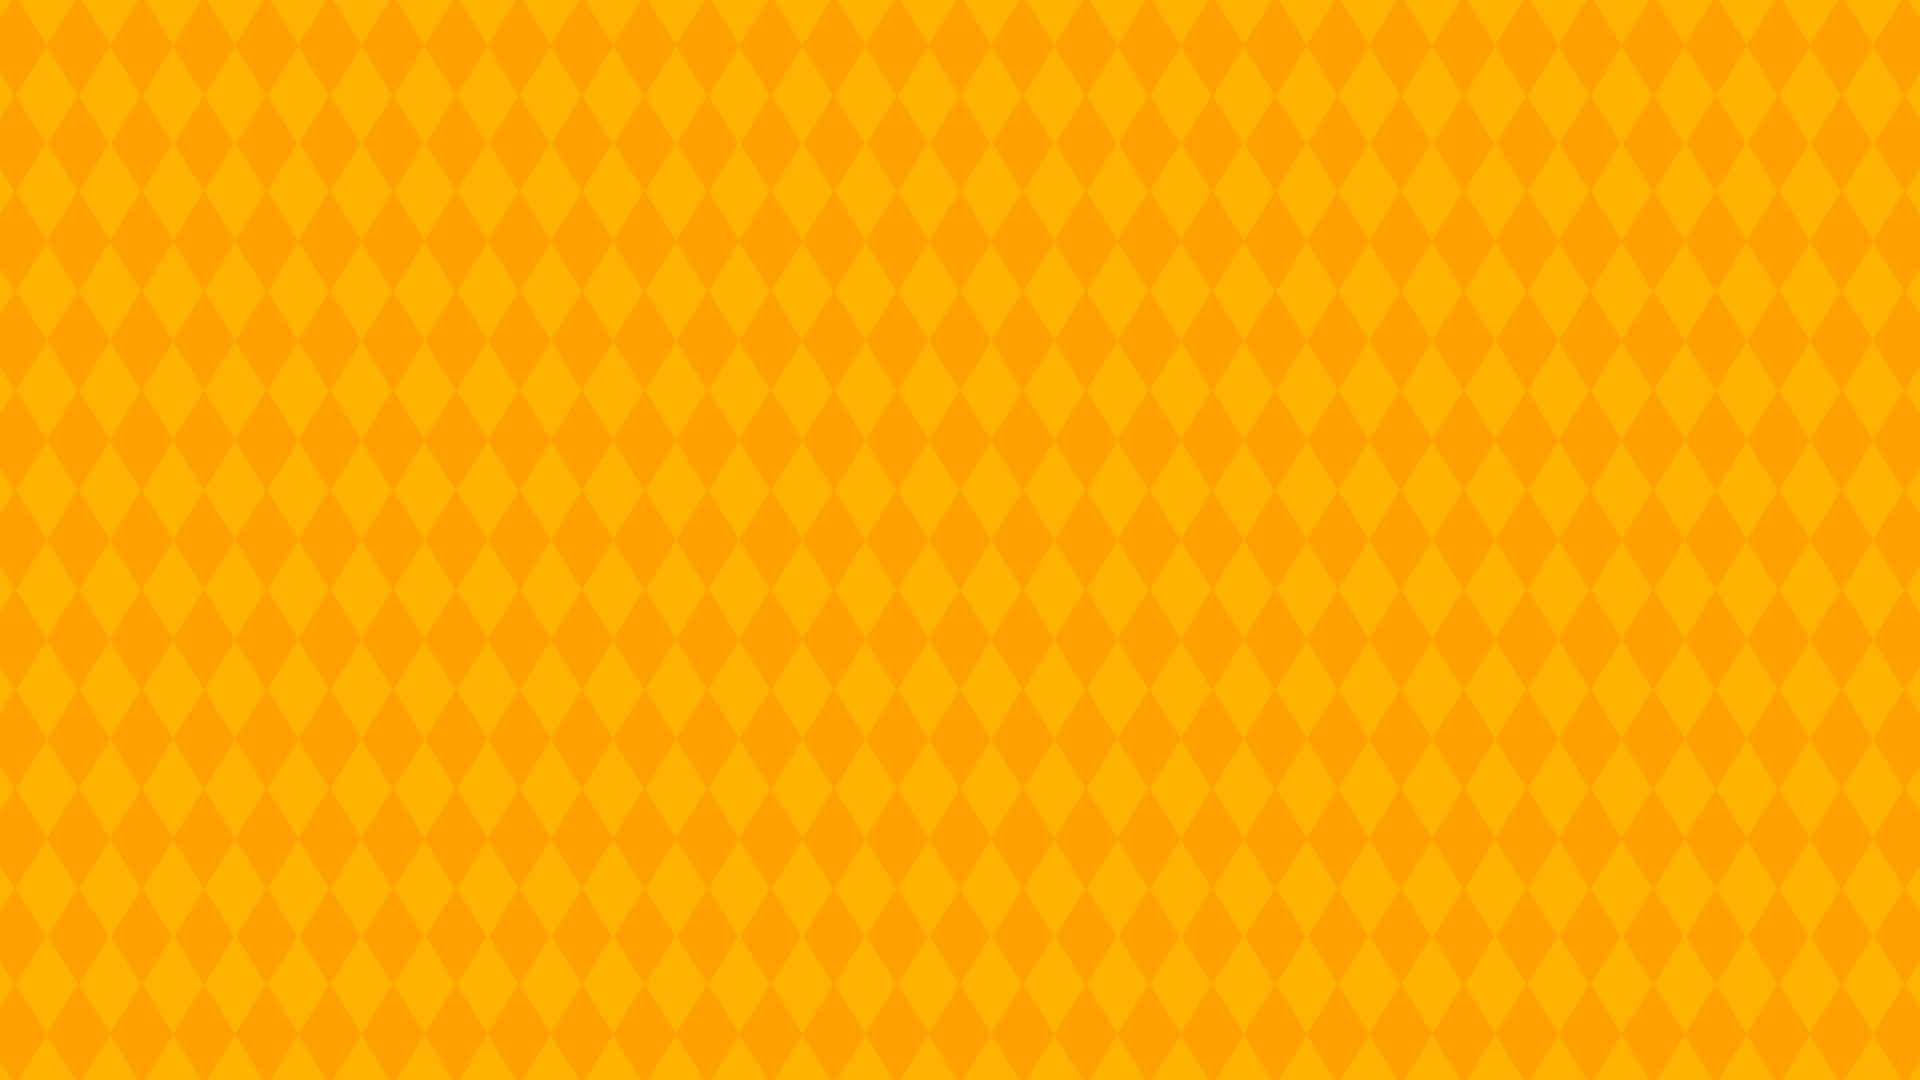 Vibrant and Adorable Orange Wallpaper